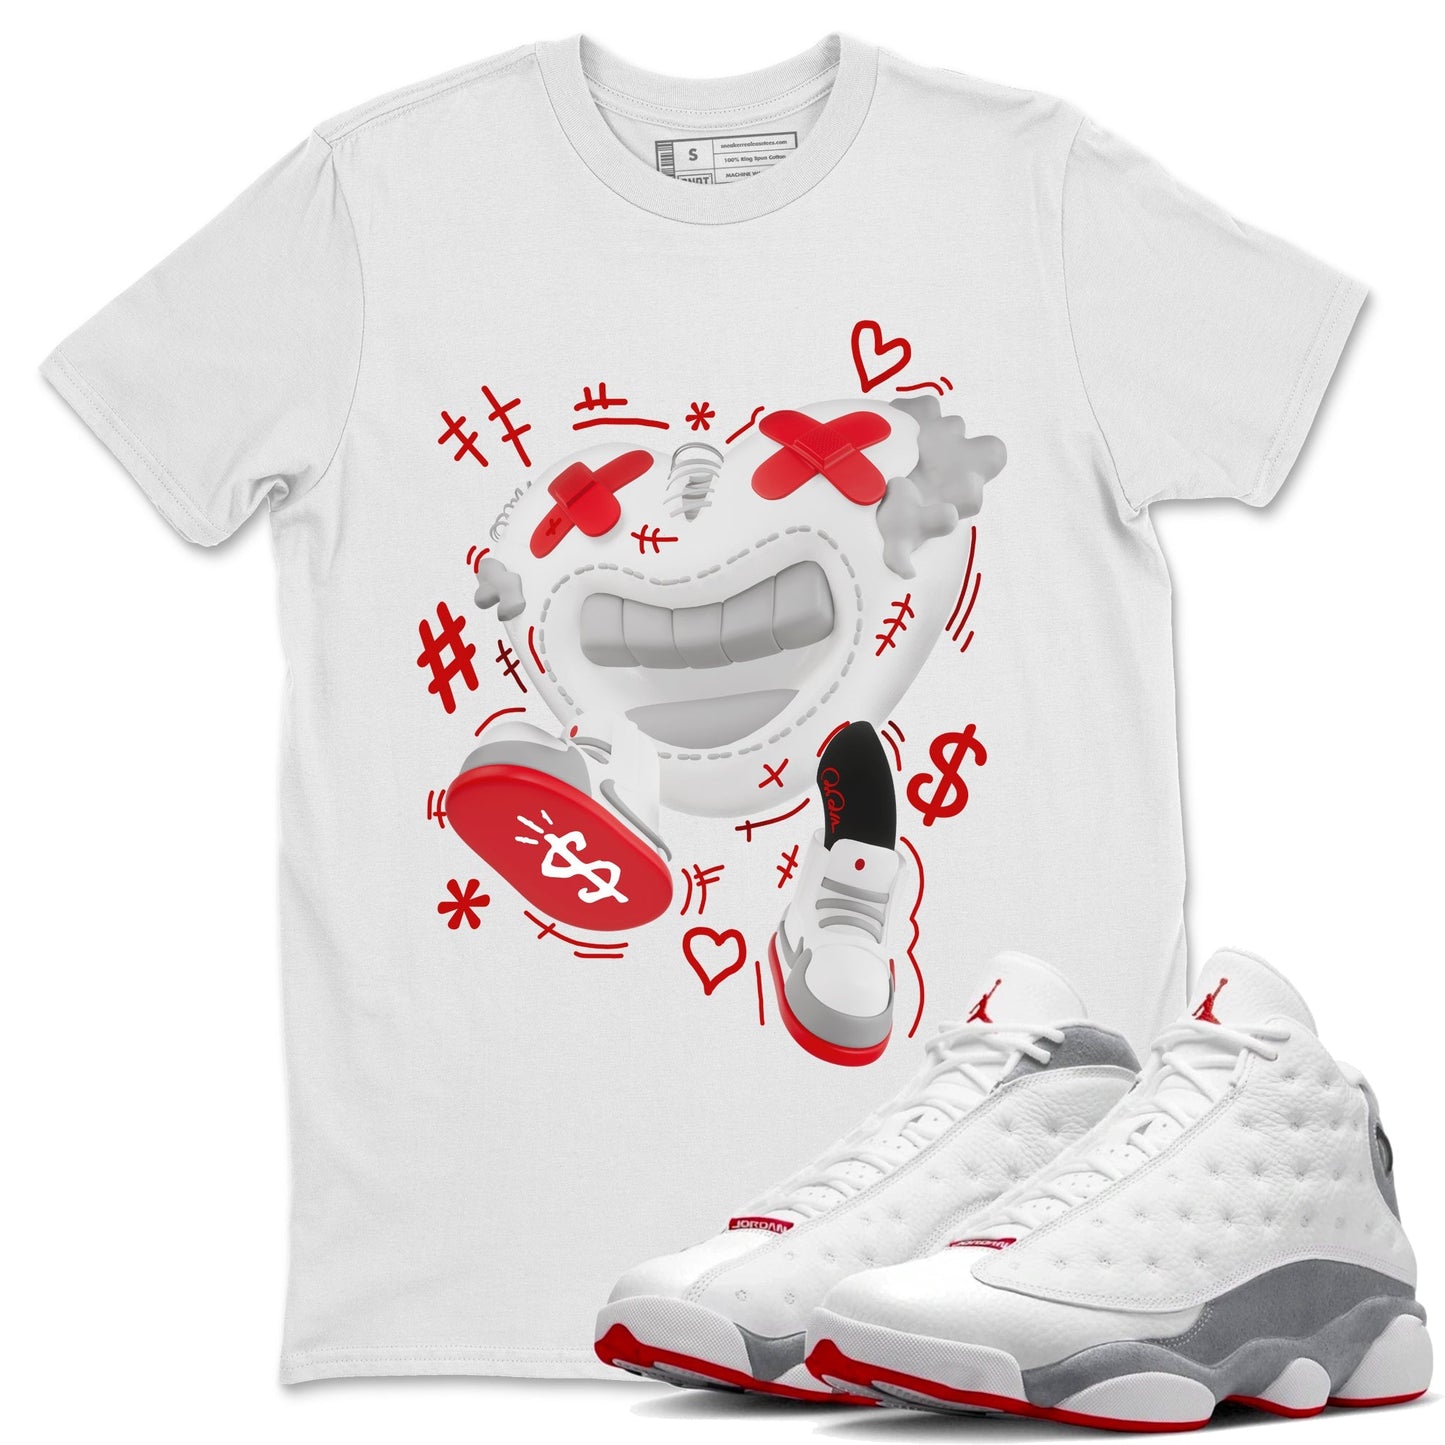 Air Jordan 13 Wolf Grey shirt to match jordans Walk In Love Streetwear Sneaker Shirt AJ13 Wolf Grey Drip Gear Zone Sneaker Matching Clothing Unisex White 1 T-Shirt